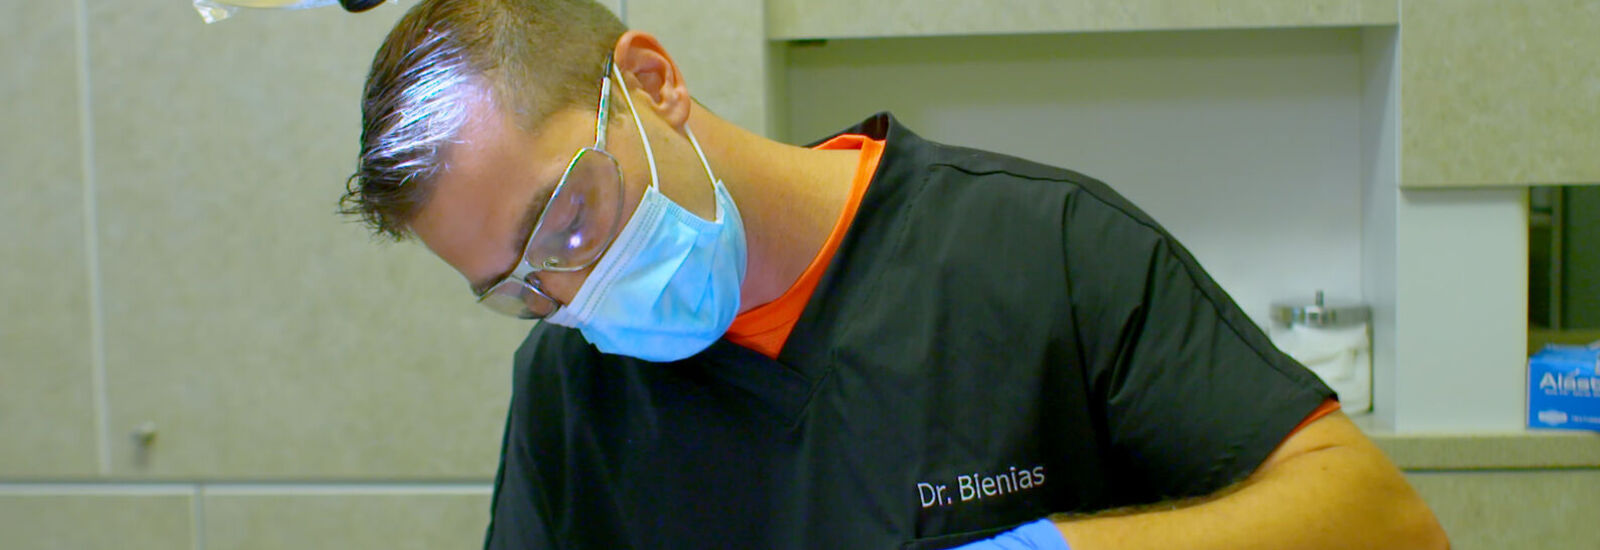 Dr. Blenias performing dental procedure